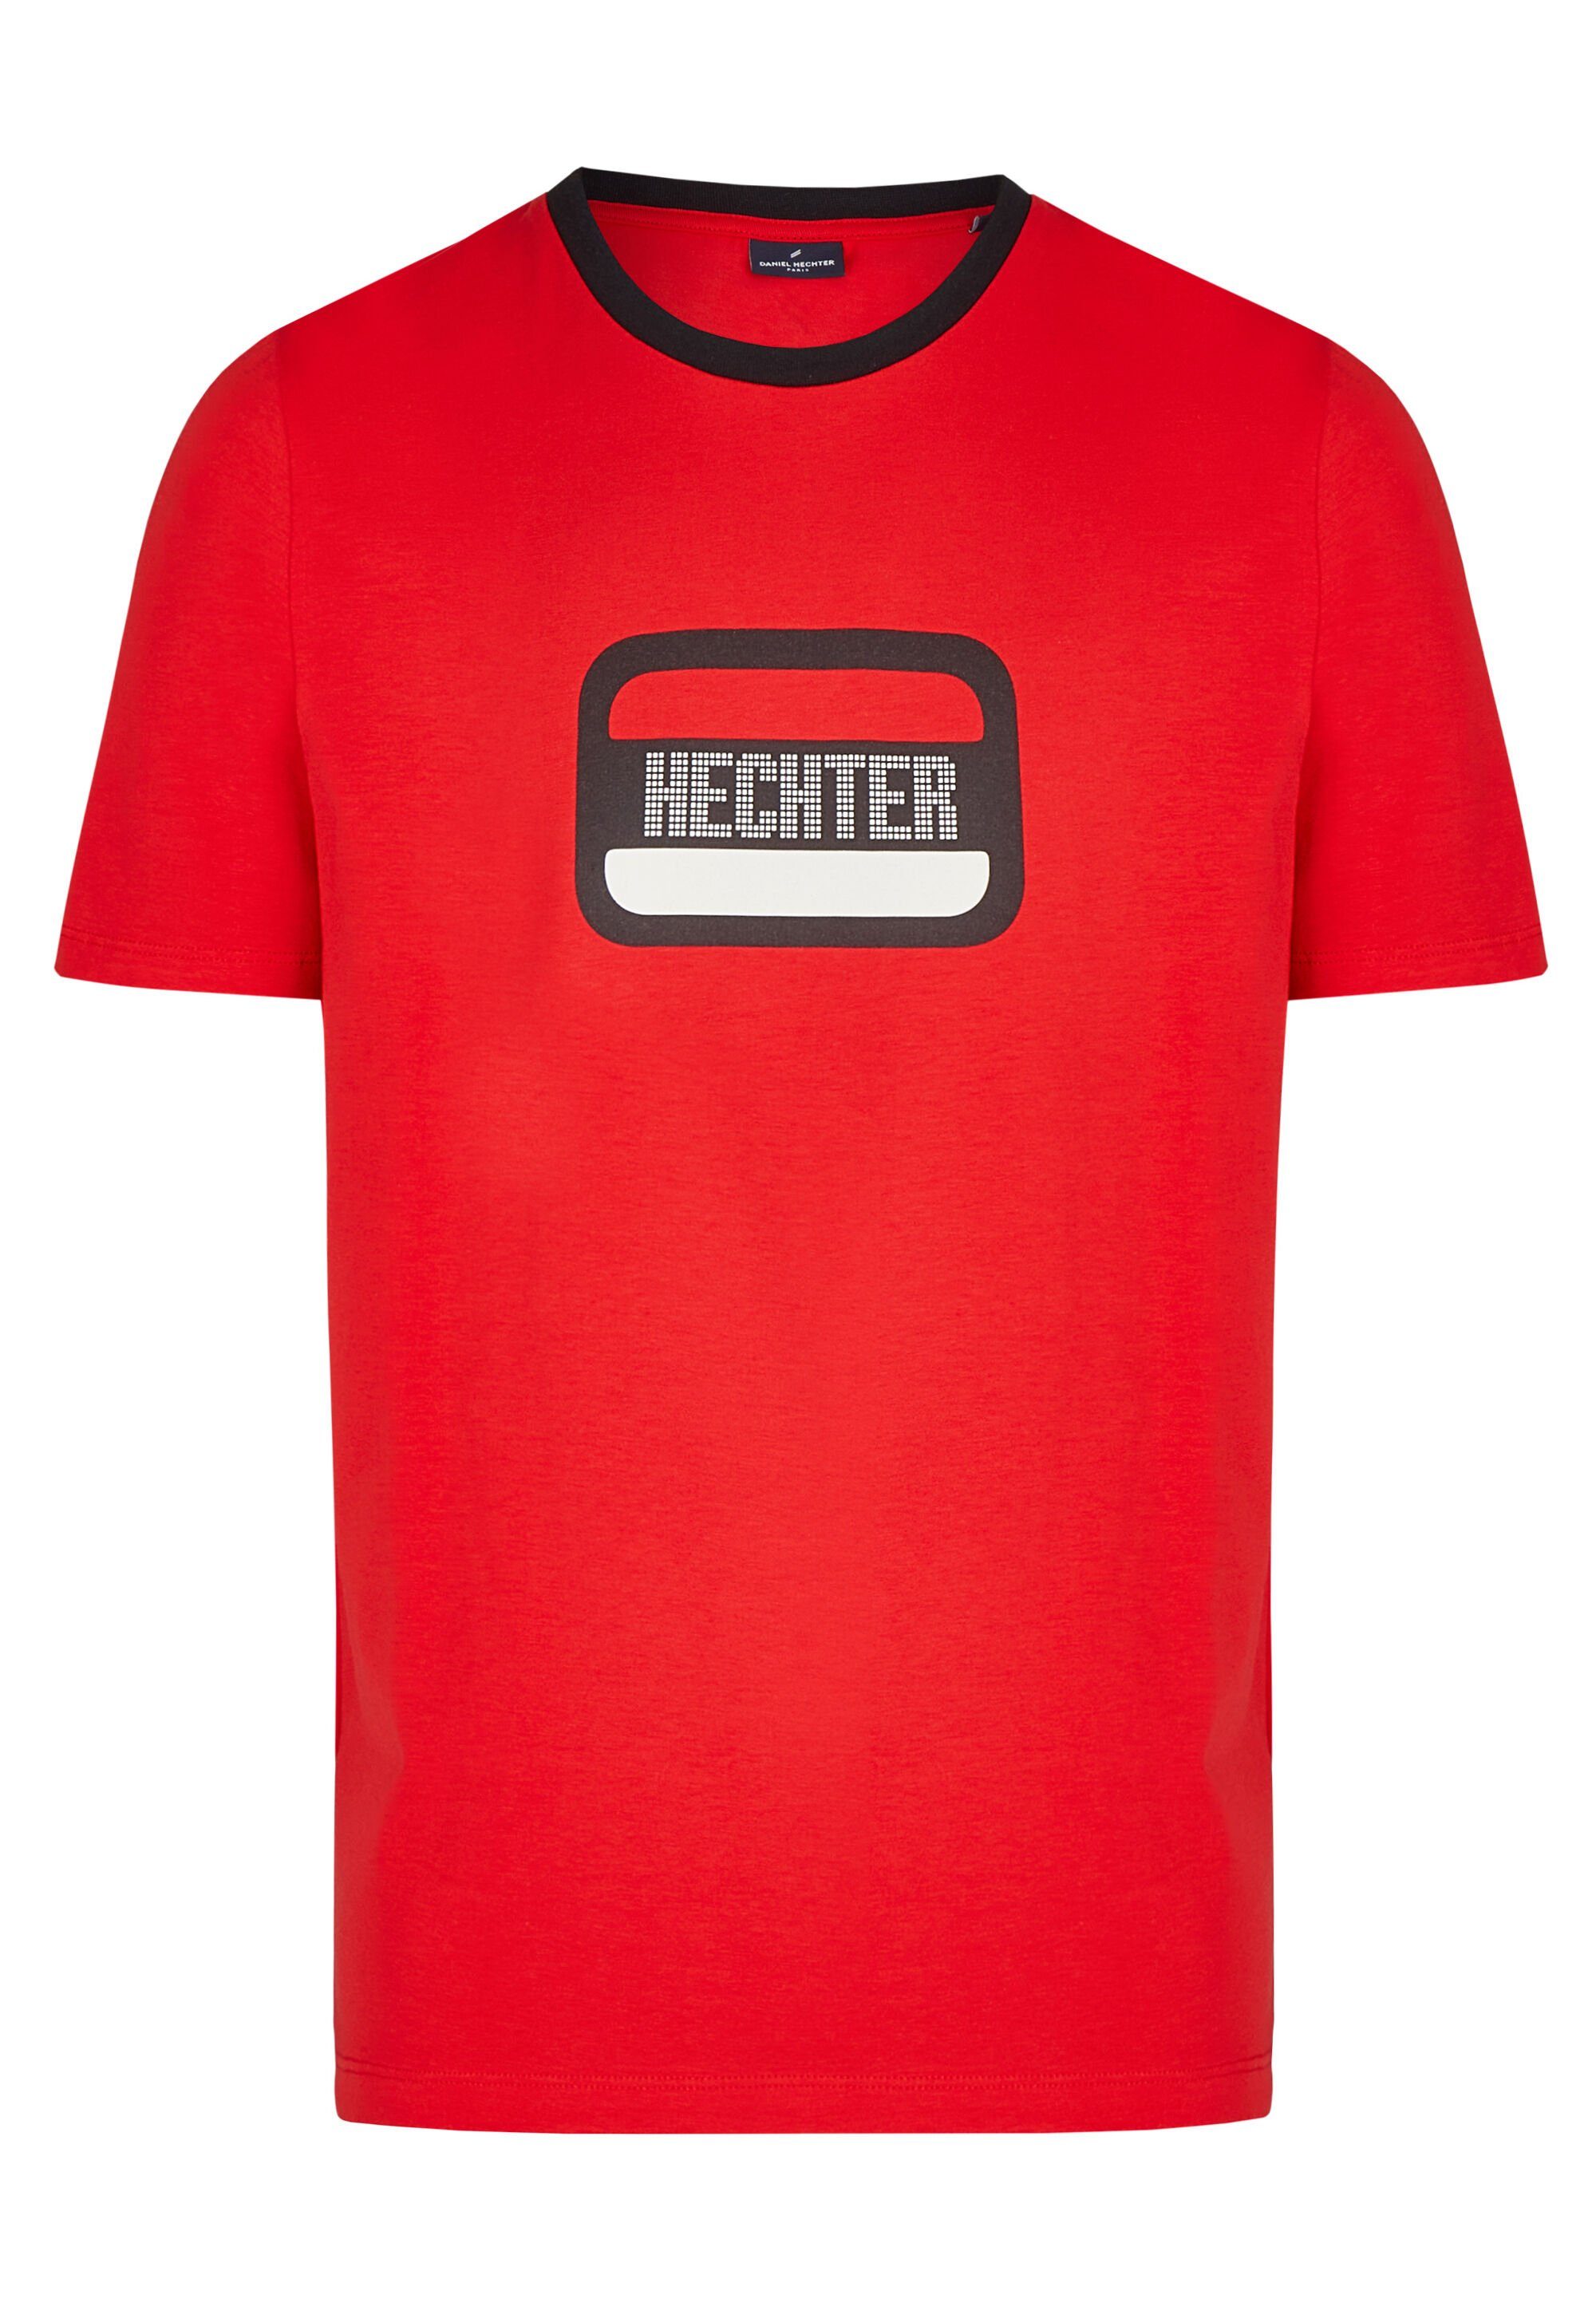 HECHTER PARIS T-Shirt mit Iconic Print chili